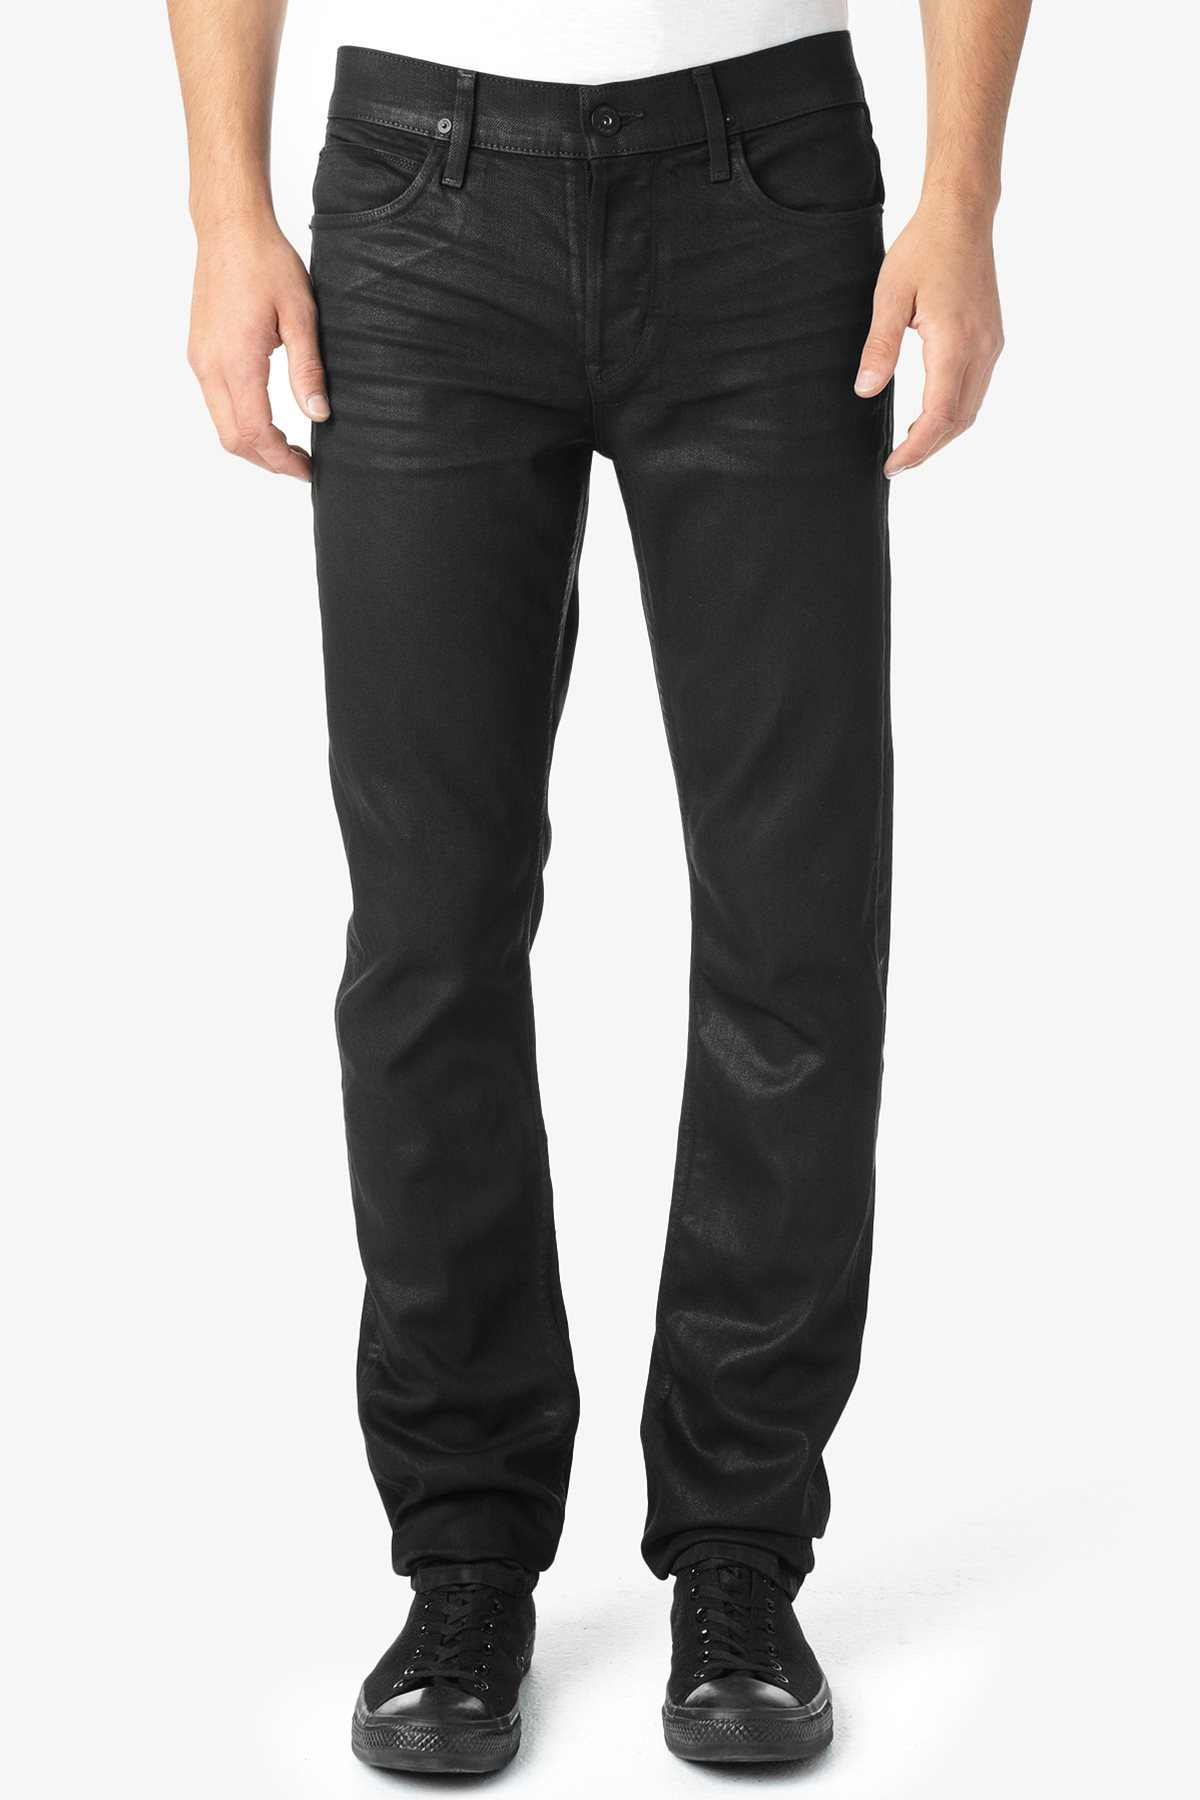 Hudson jeans Barrow Skinny in Black for Men | Lyst